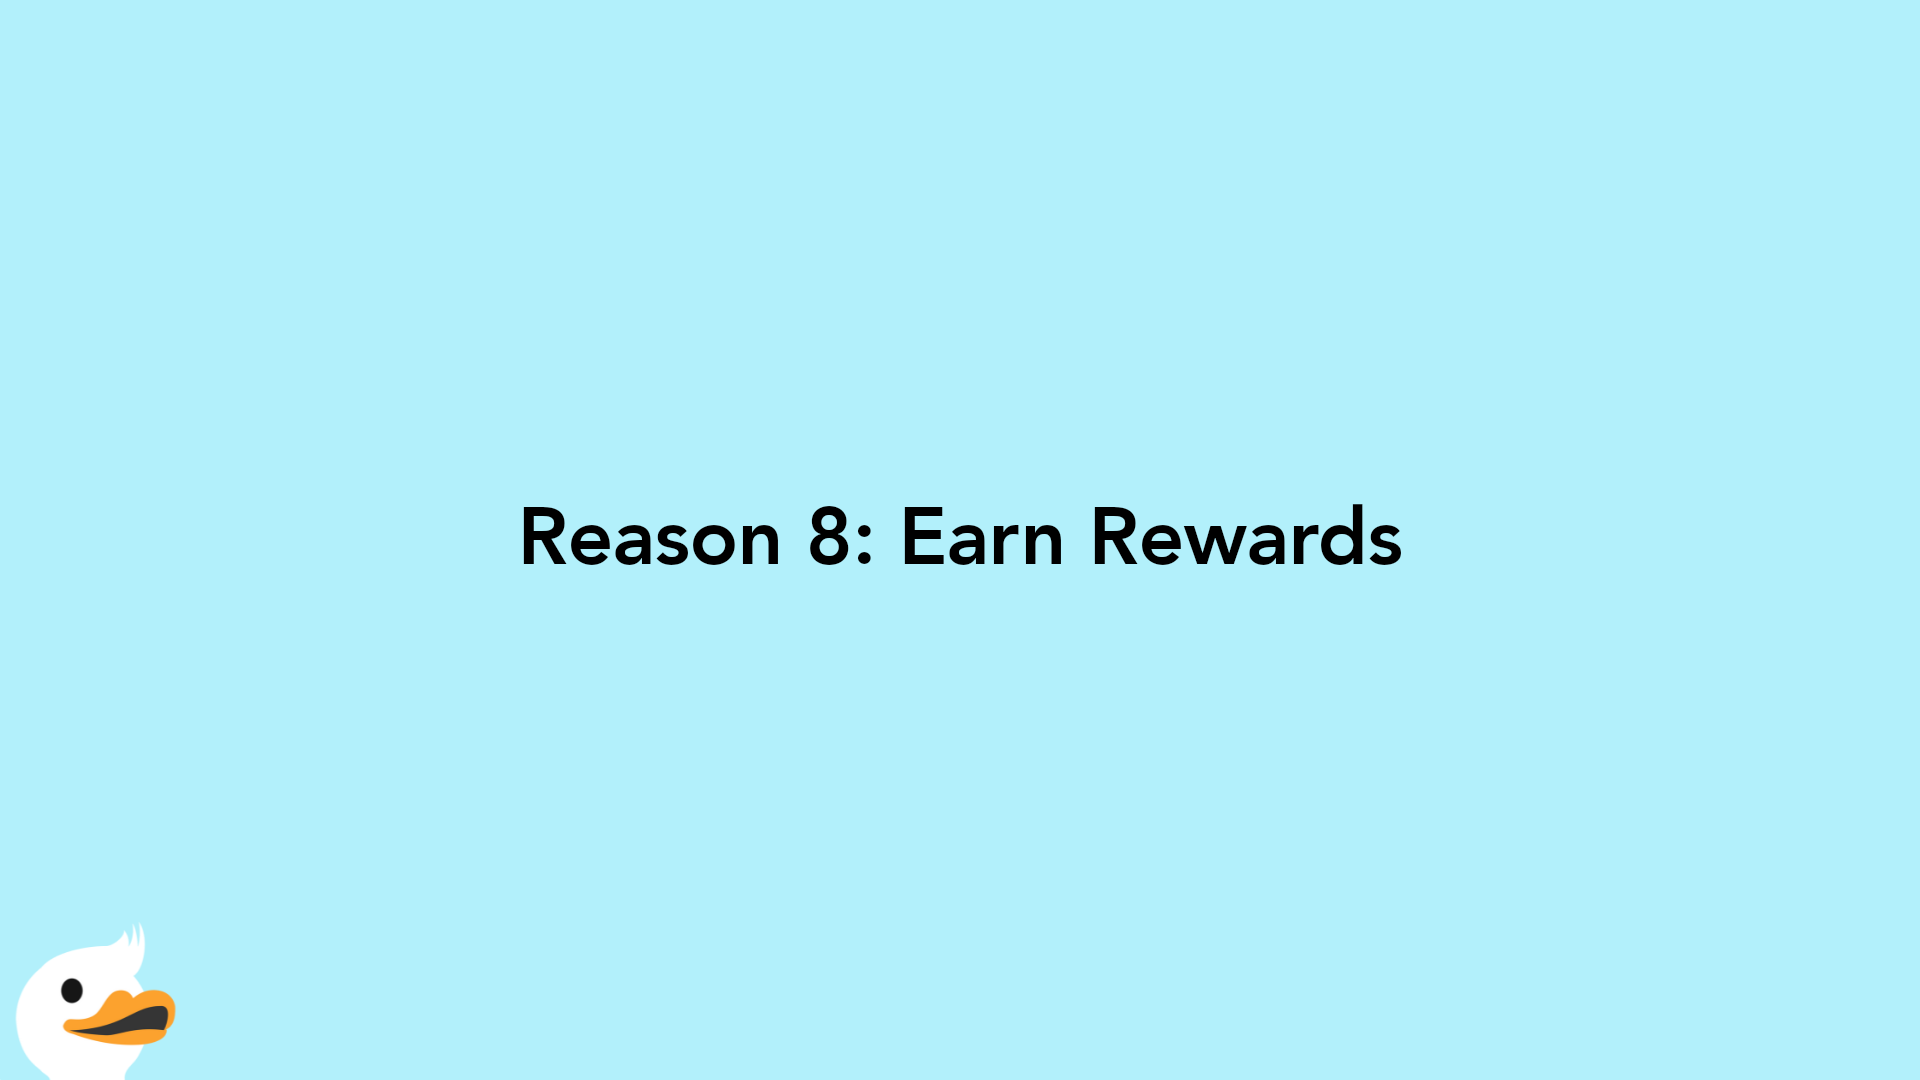 Reason 8: Earn Rewards